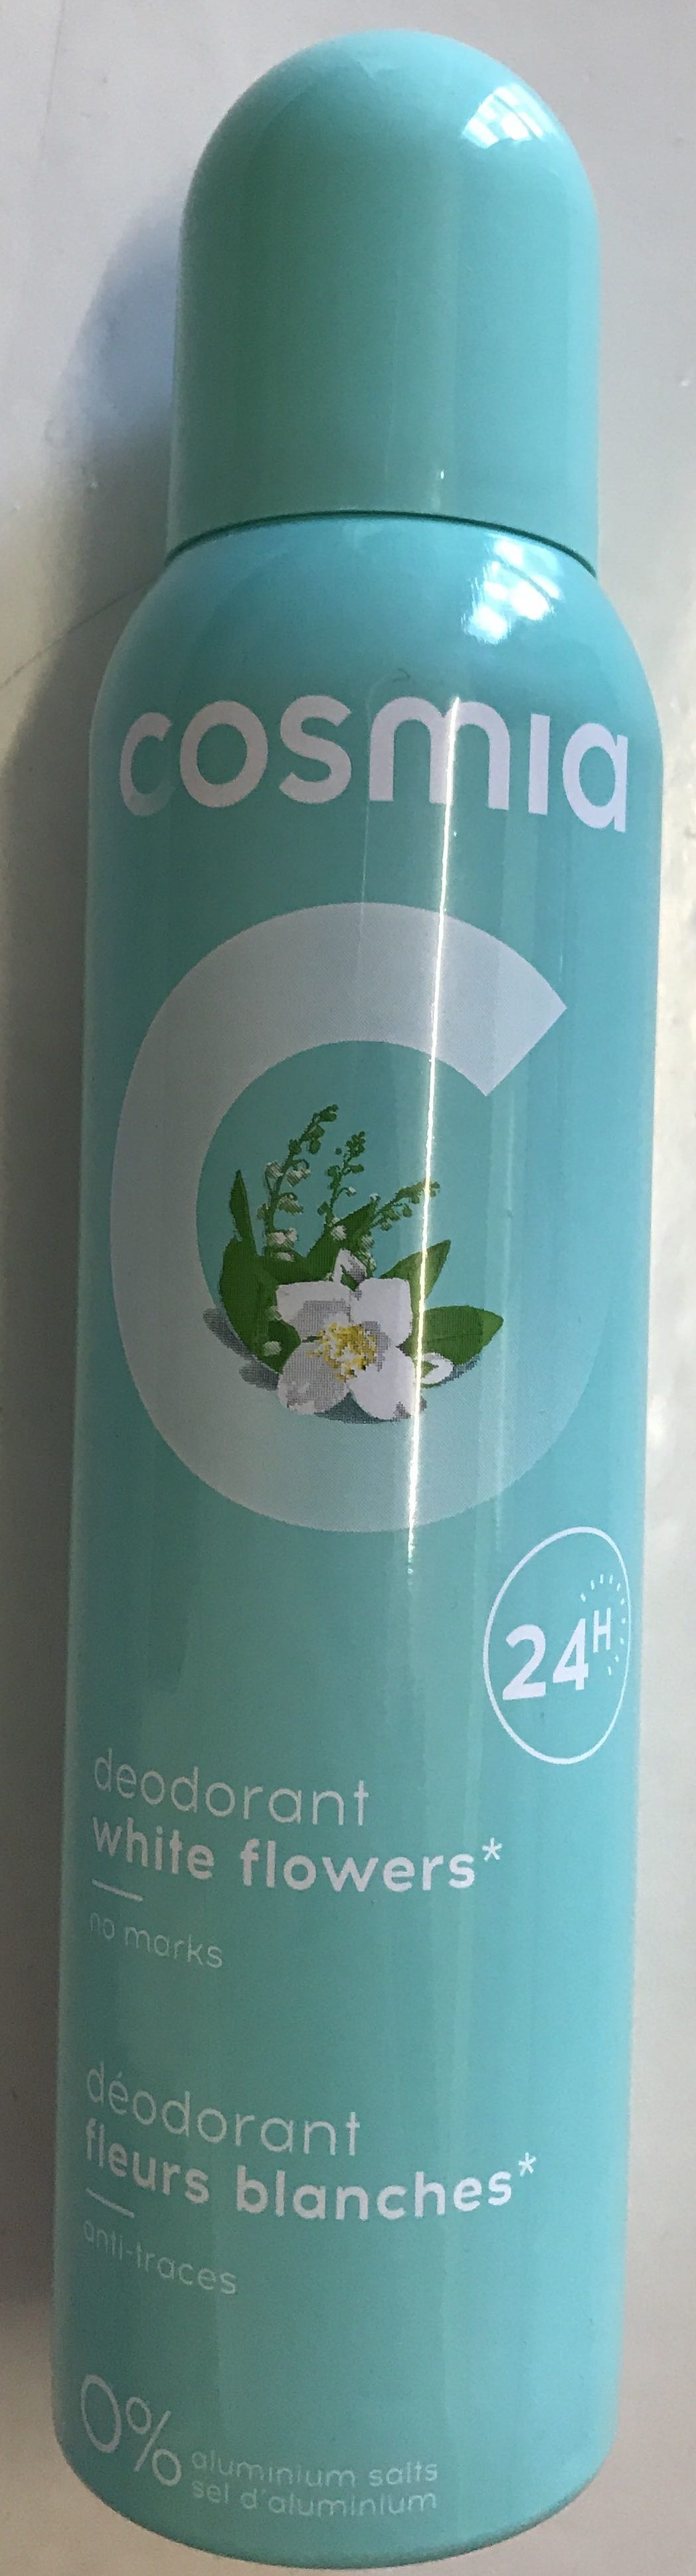 Déodorant fleurs blanches 24H - Product - fr